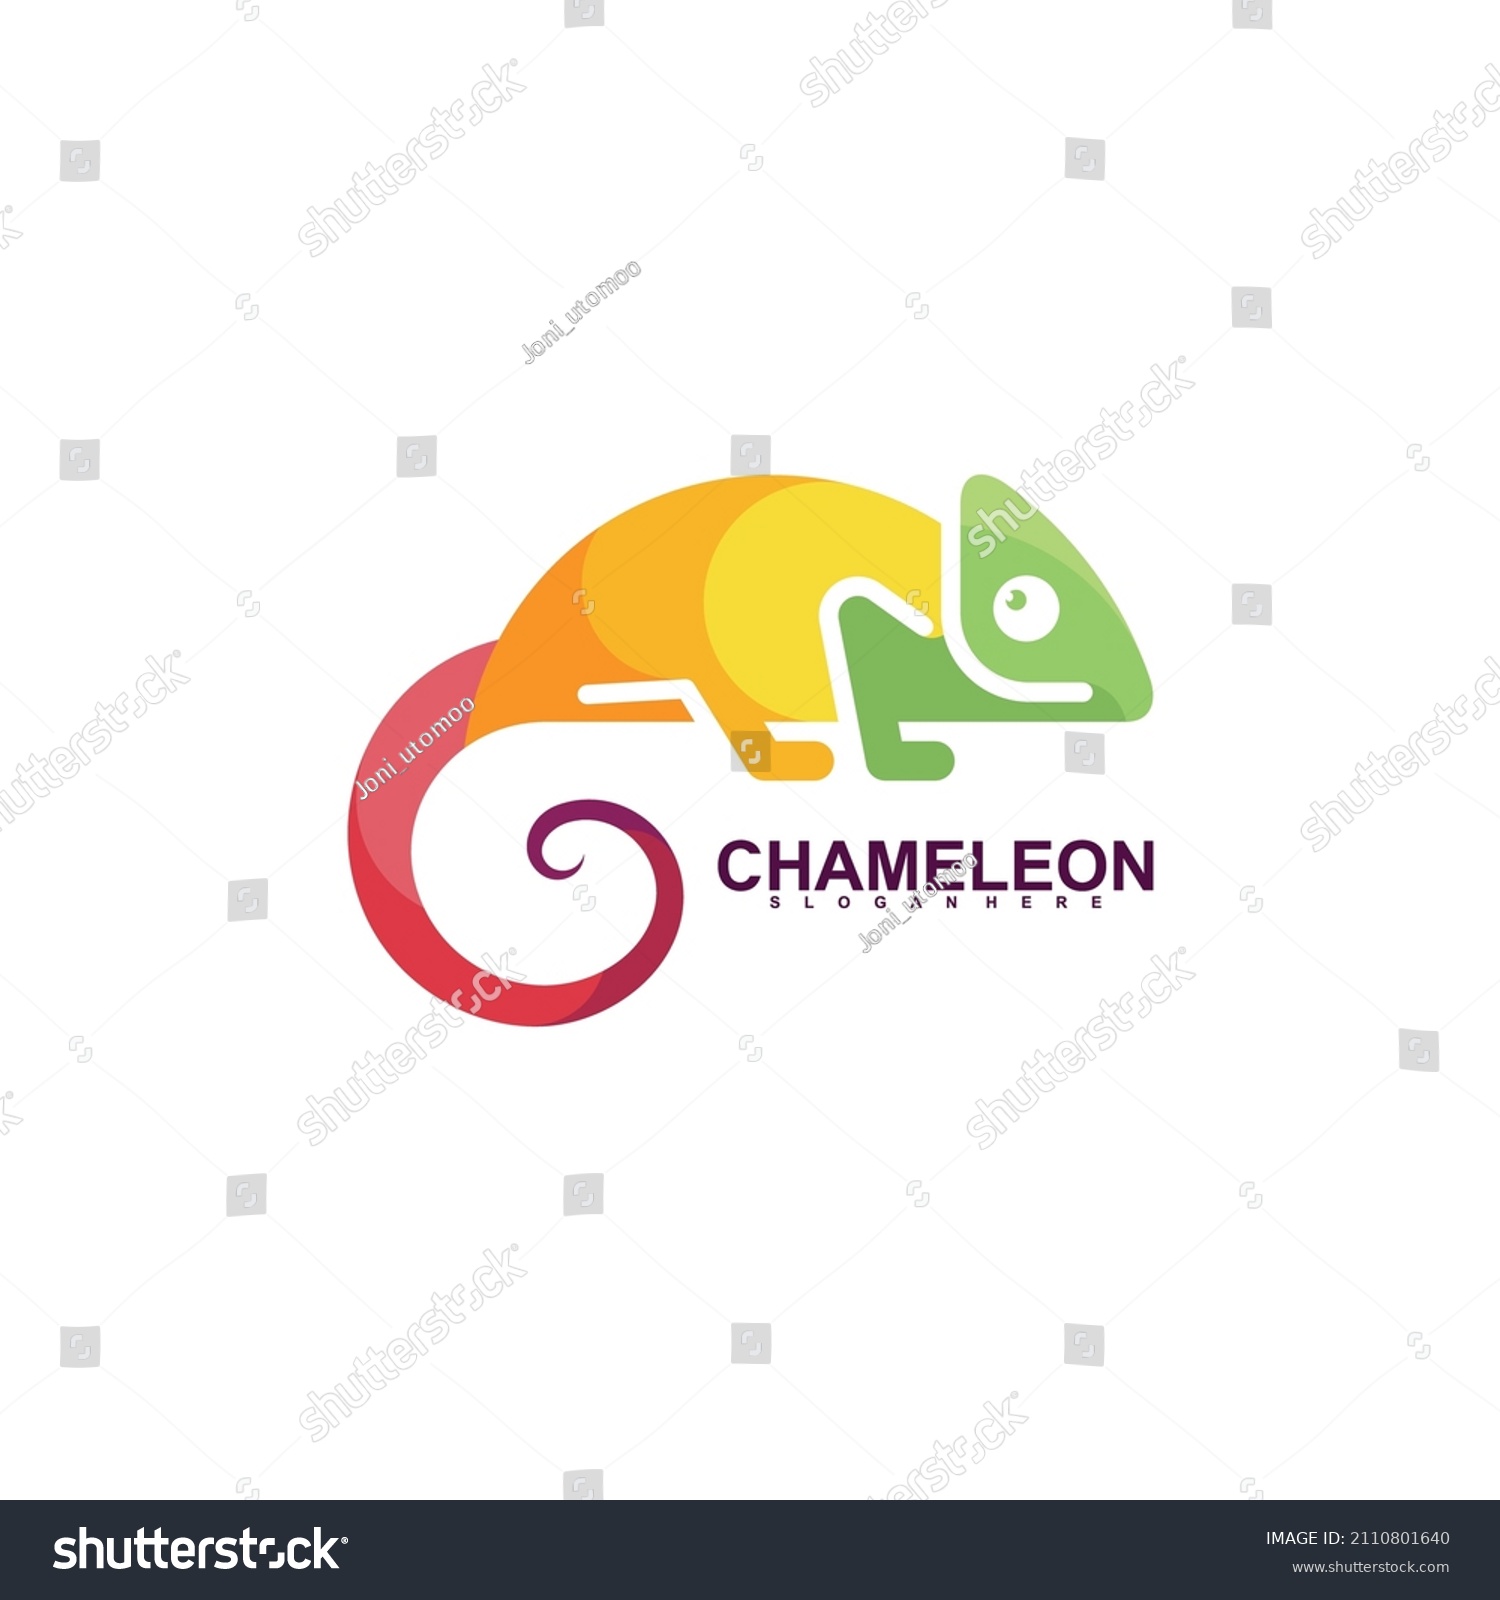 SVG of Chameleon logo vector illustration concept with unique shapes and full colors design. Creative design premium svg